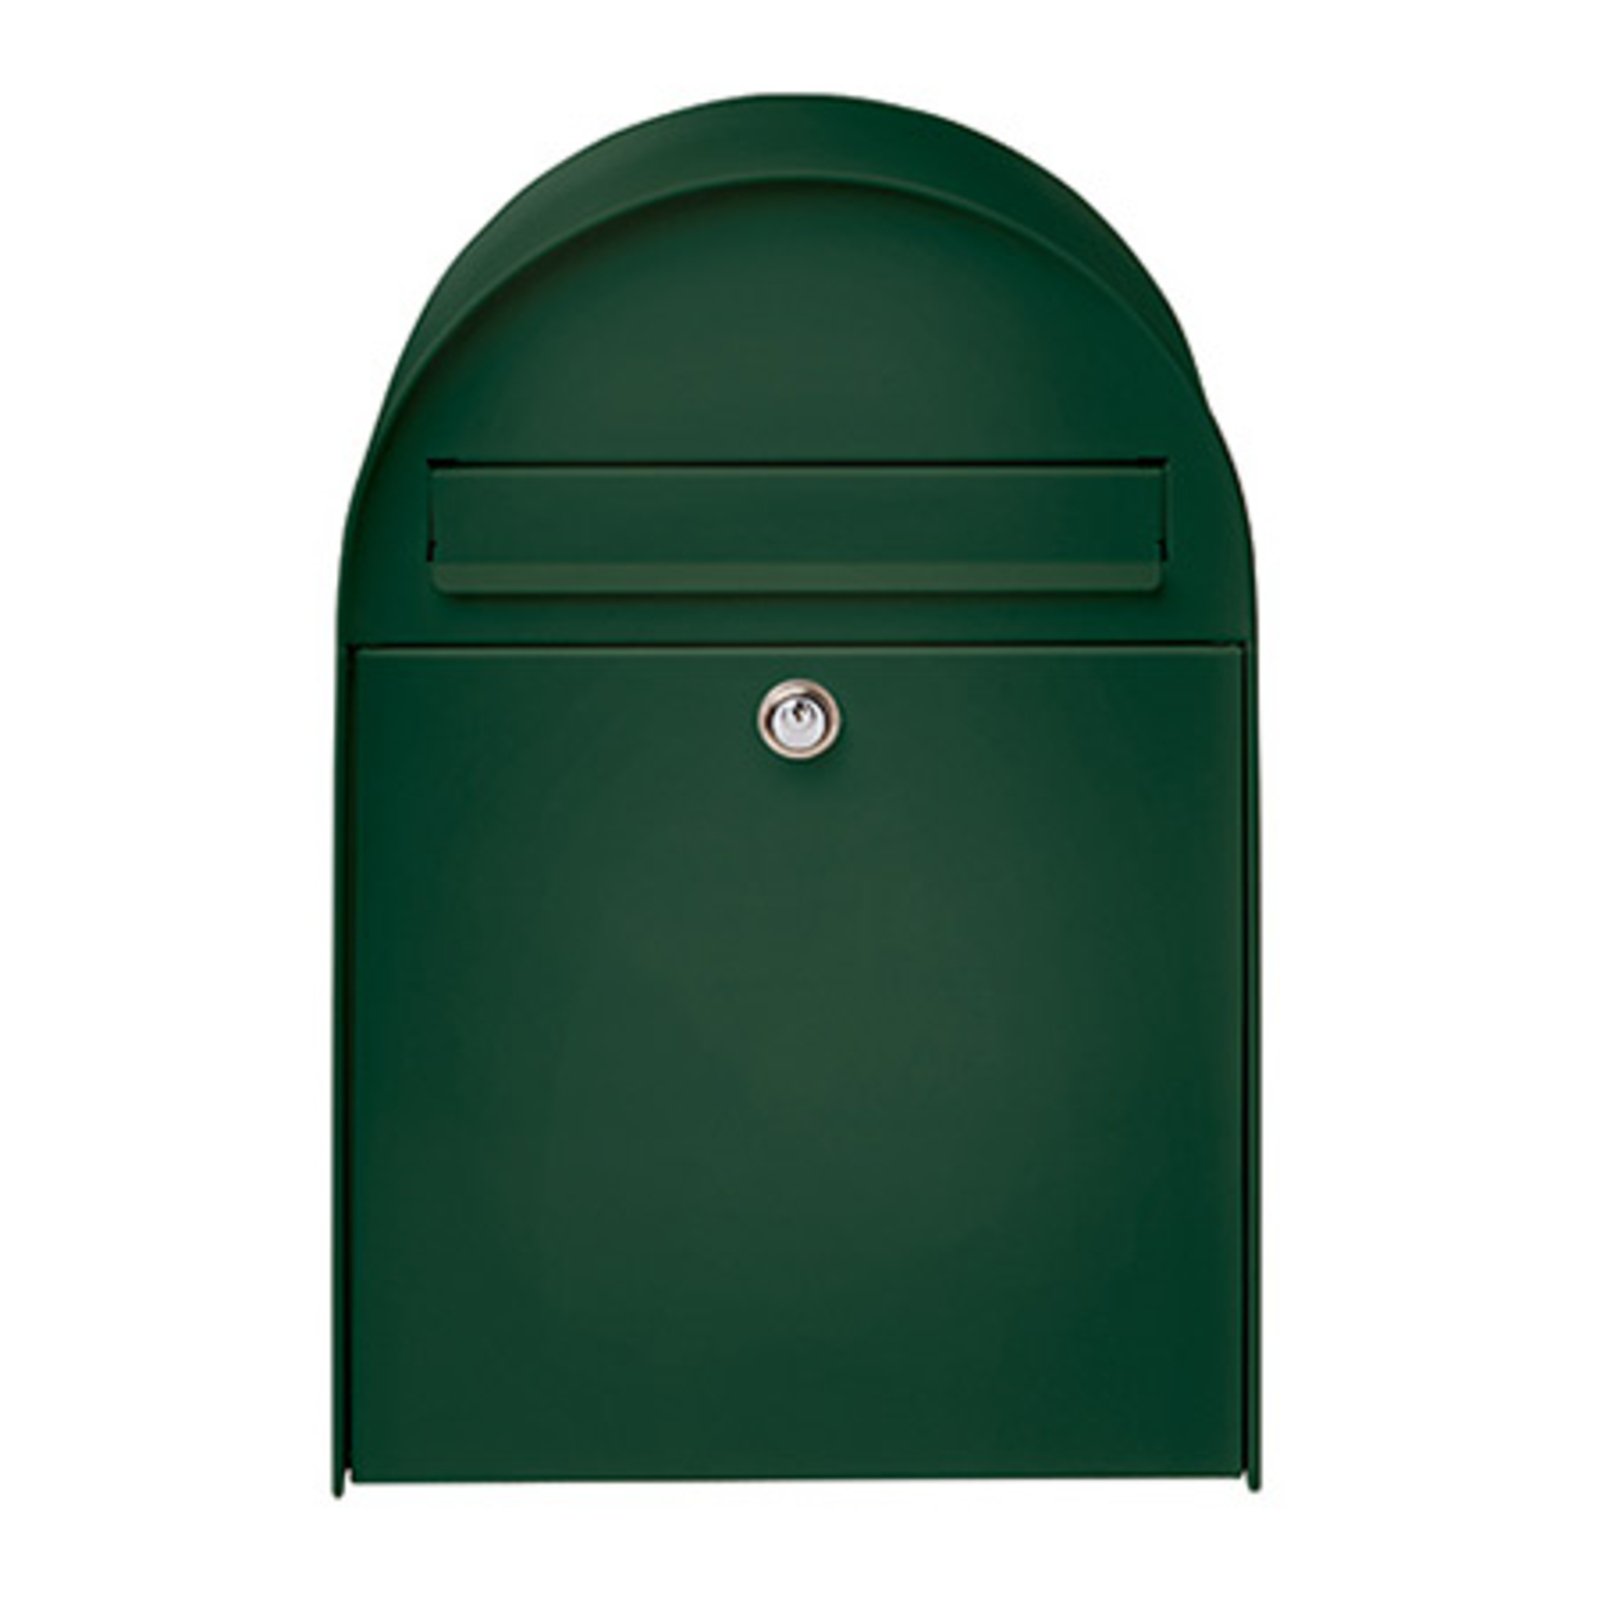 Priestranná poštová schránka Nordic 680 v zelenej